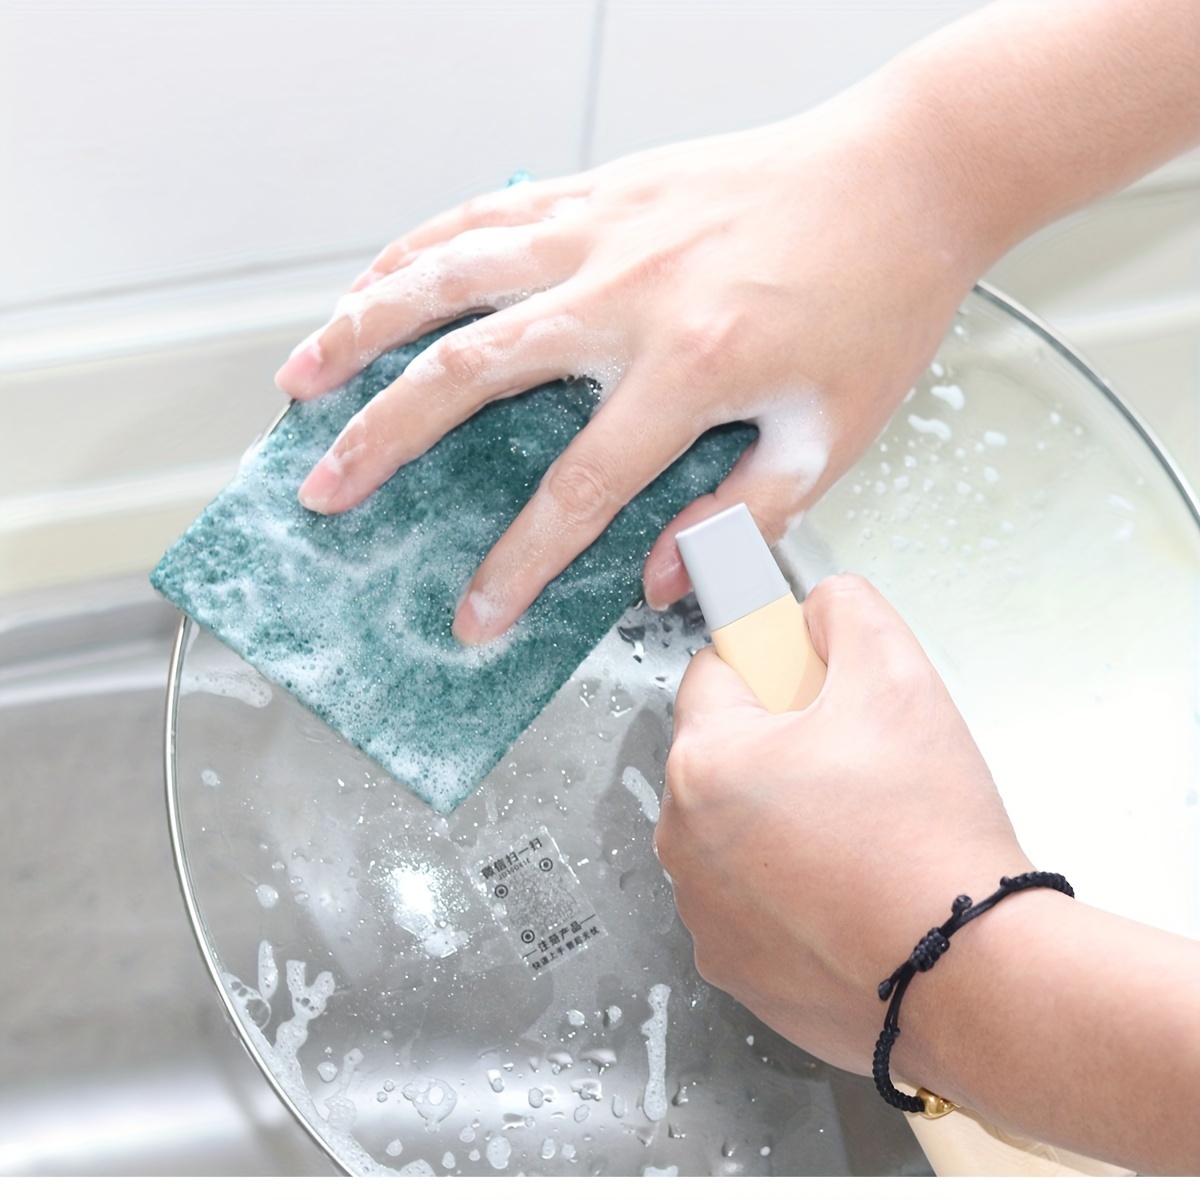 Dish Scrubbing Brush, Pot Scrubber, Microfiber Dish Cloths